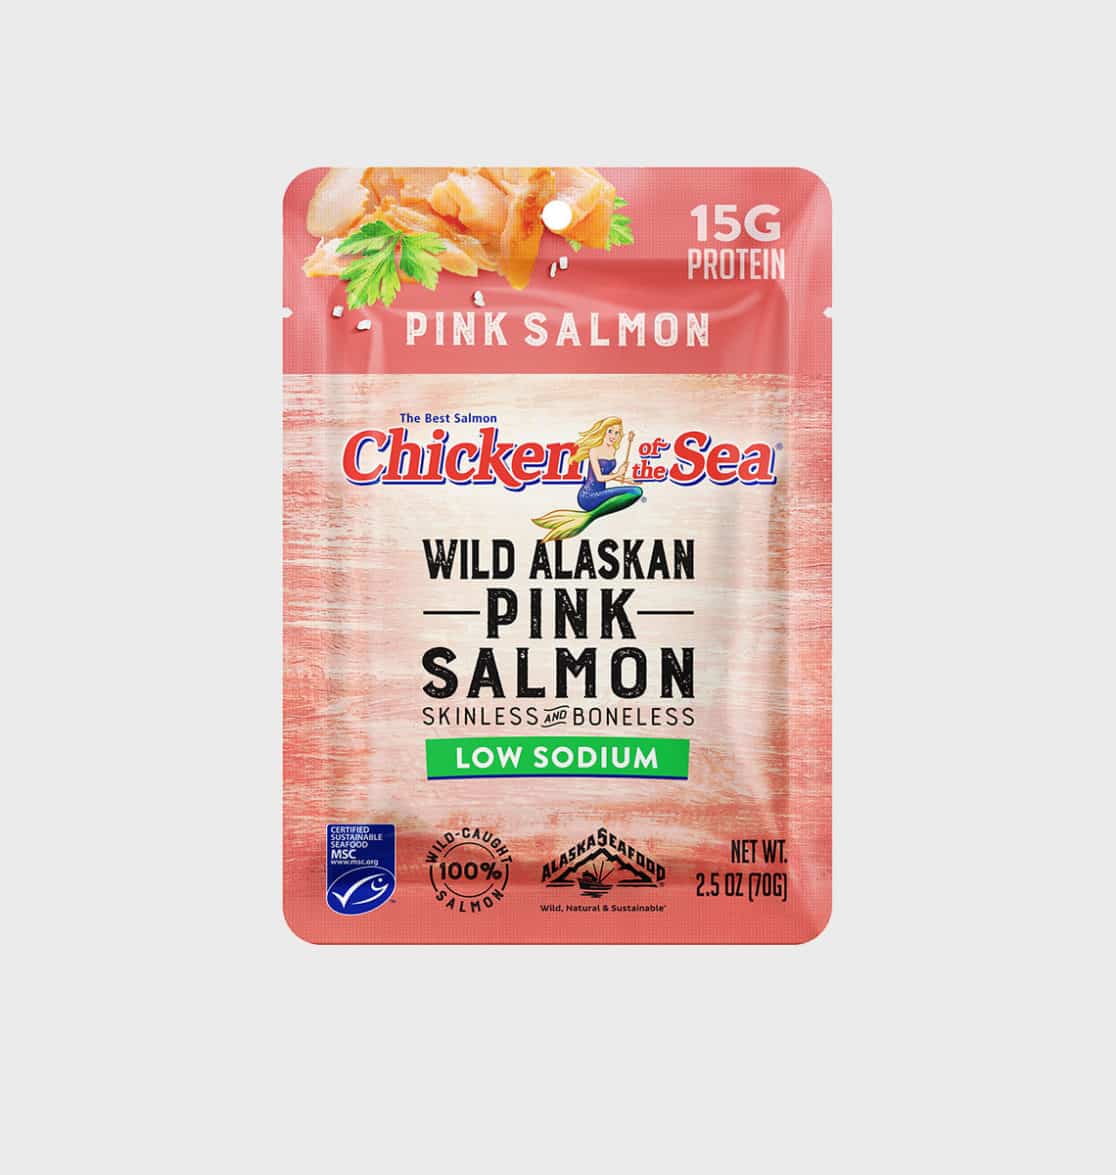 Wild Alaskan Pink Salmon Packet, Low Sodium | Chicken of the Sea